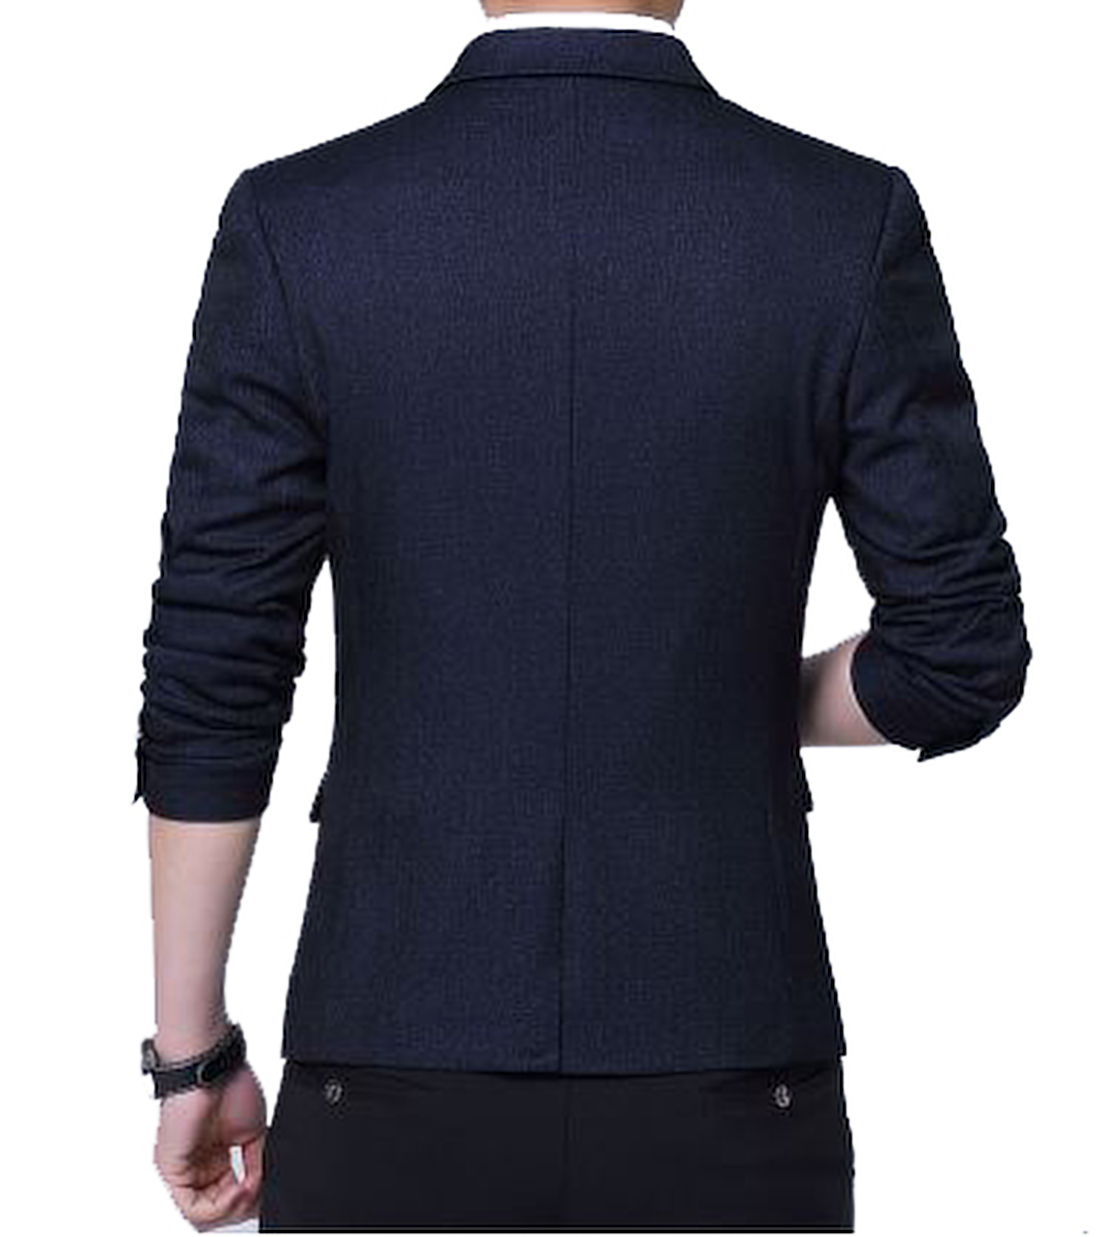 Buy Men's Dark Blue Casual Party Blazer Online @ ₹3500 from ShopClues